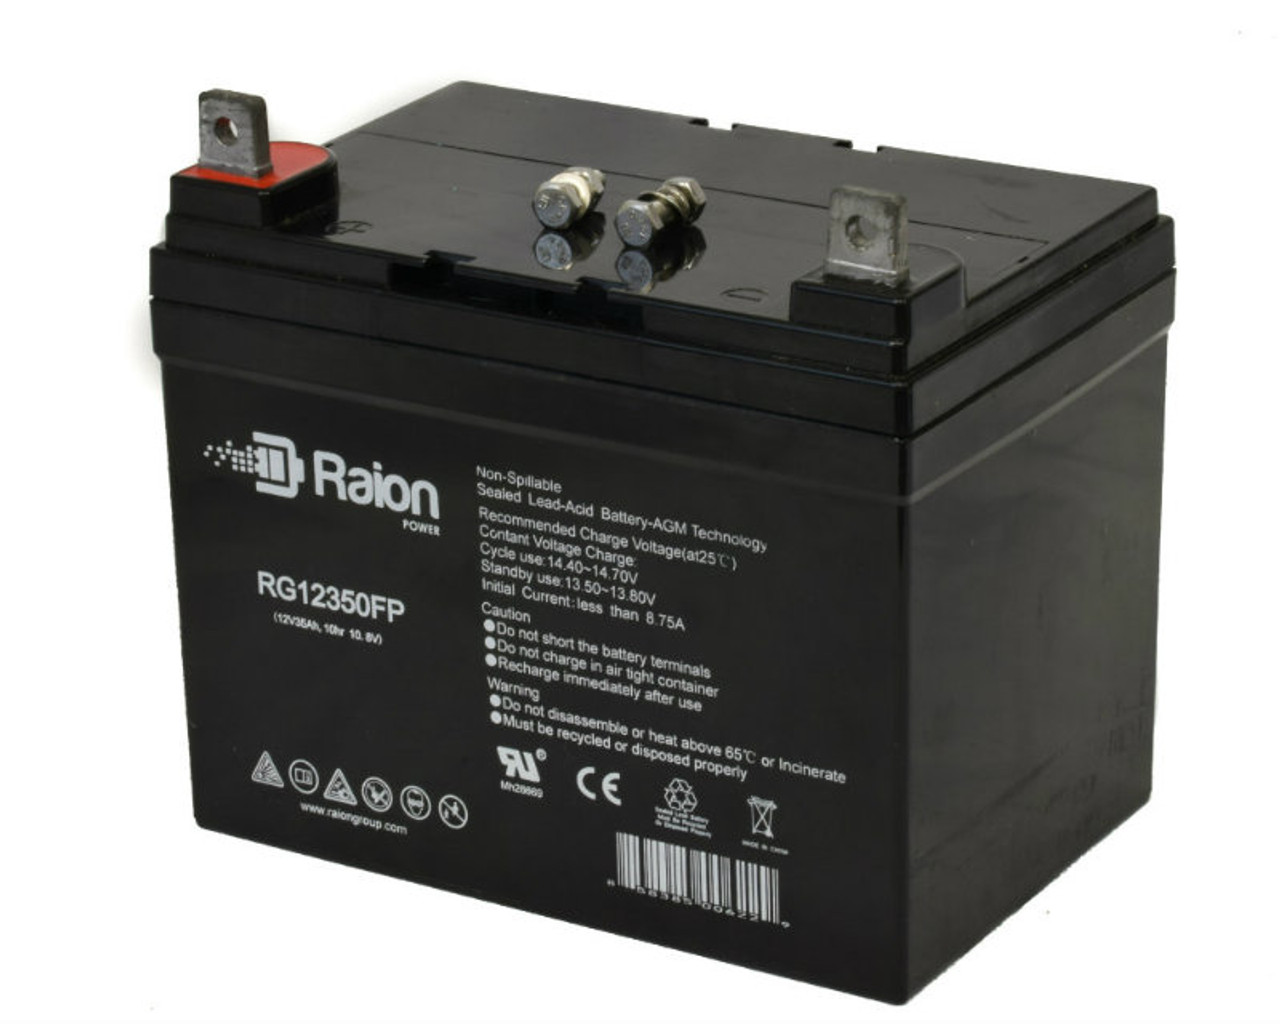 Raion Power 12V 35Ah Replacement UPS Battery Cartridge for Alpha Technologies CC (017-098-XX)